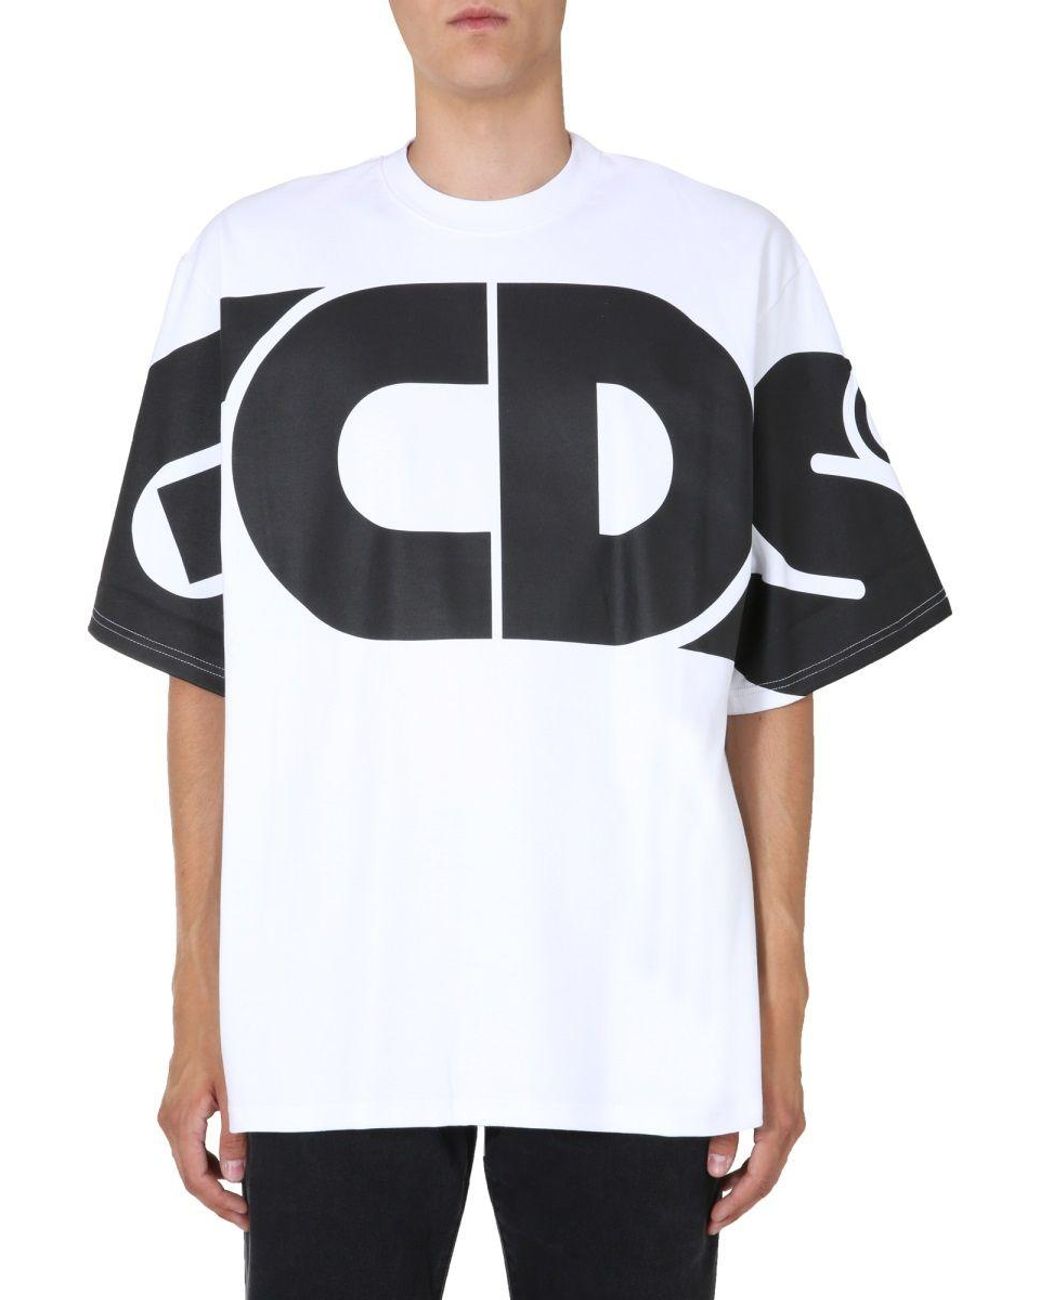 Gcds Cotton T-shirt in White for Men - Lyst